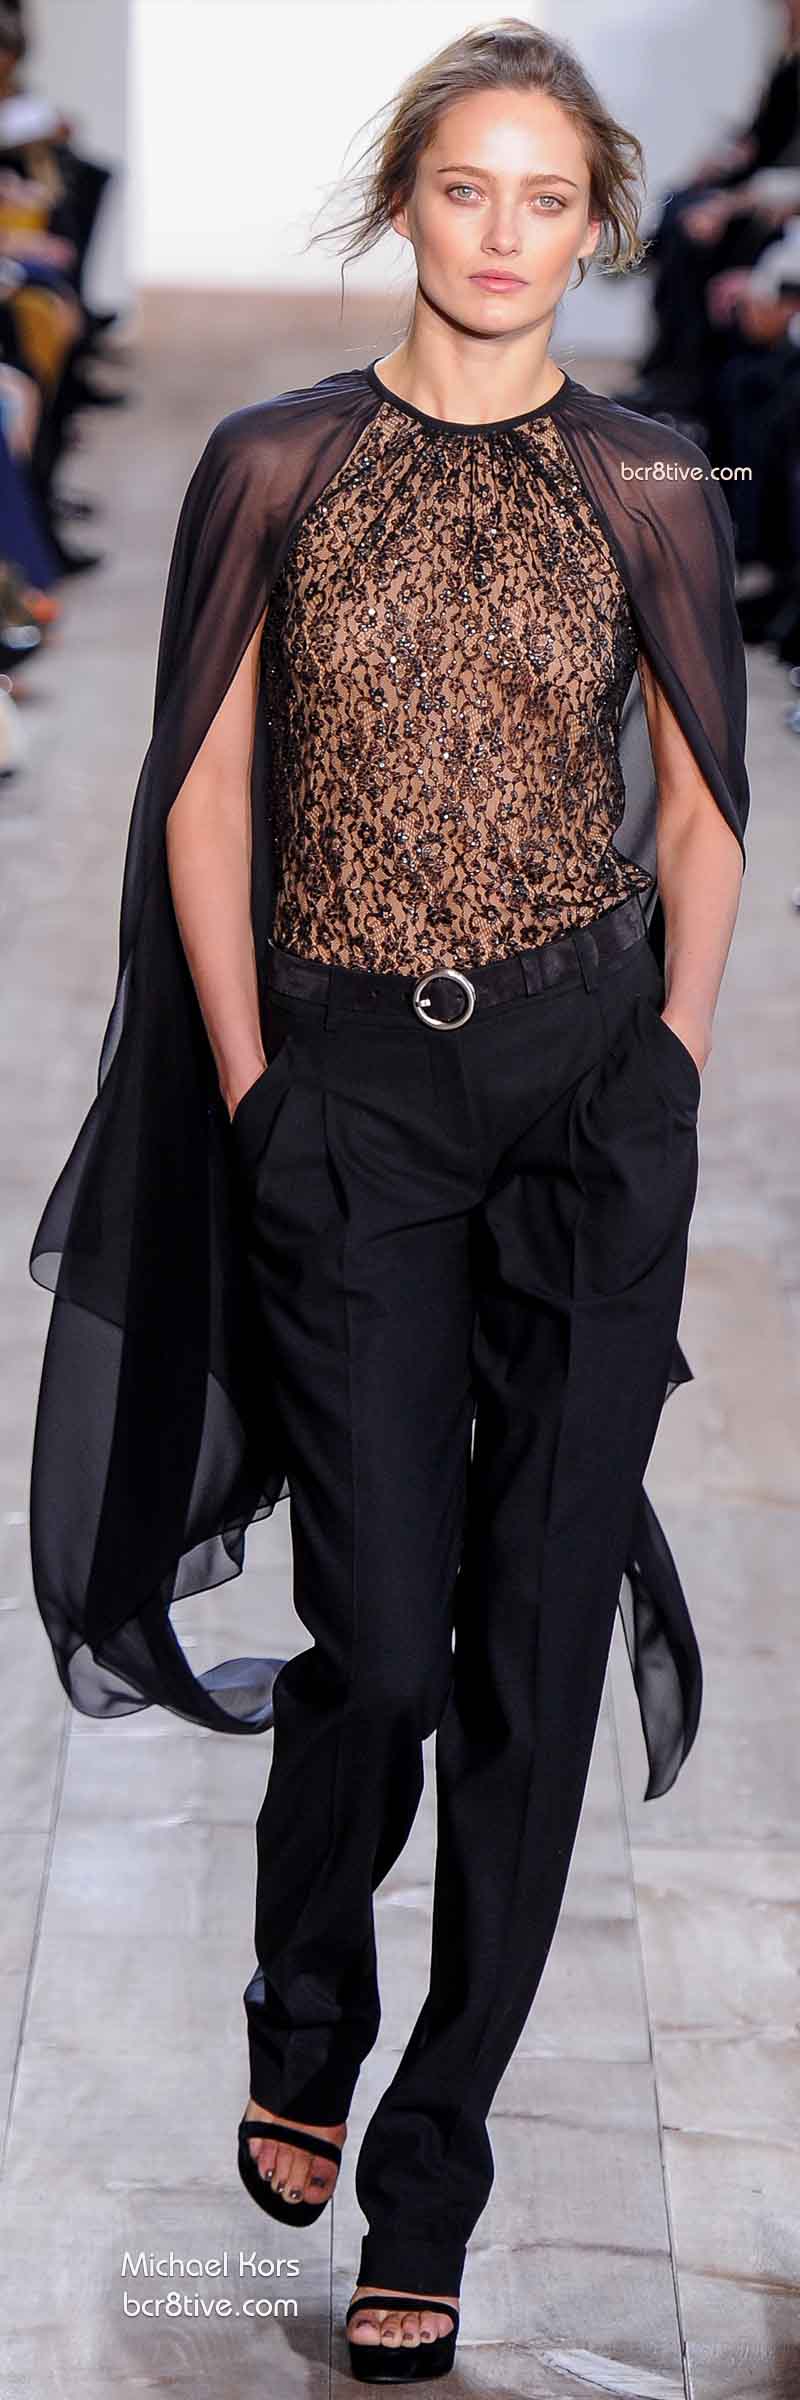 Fall 2014 Menswear Inspired Fashion - Michael Kors